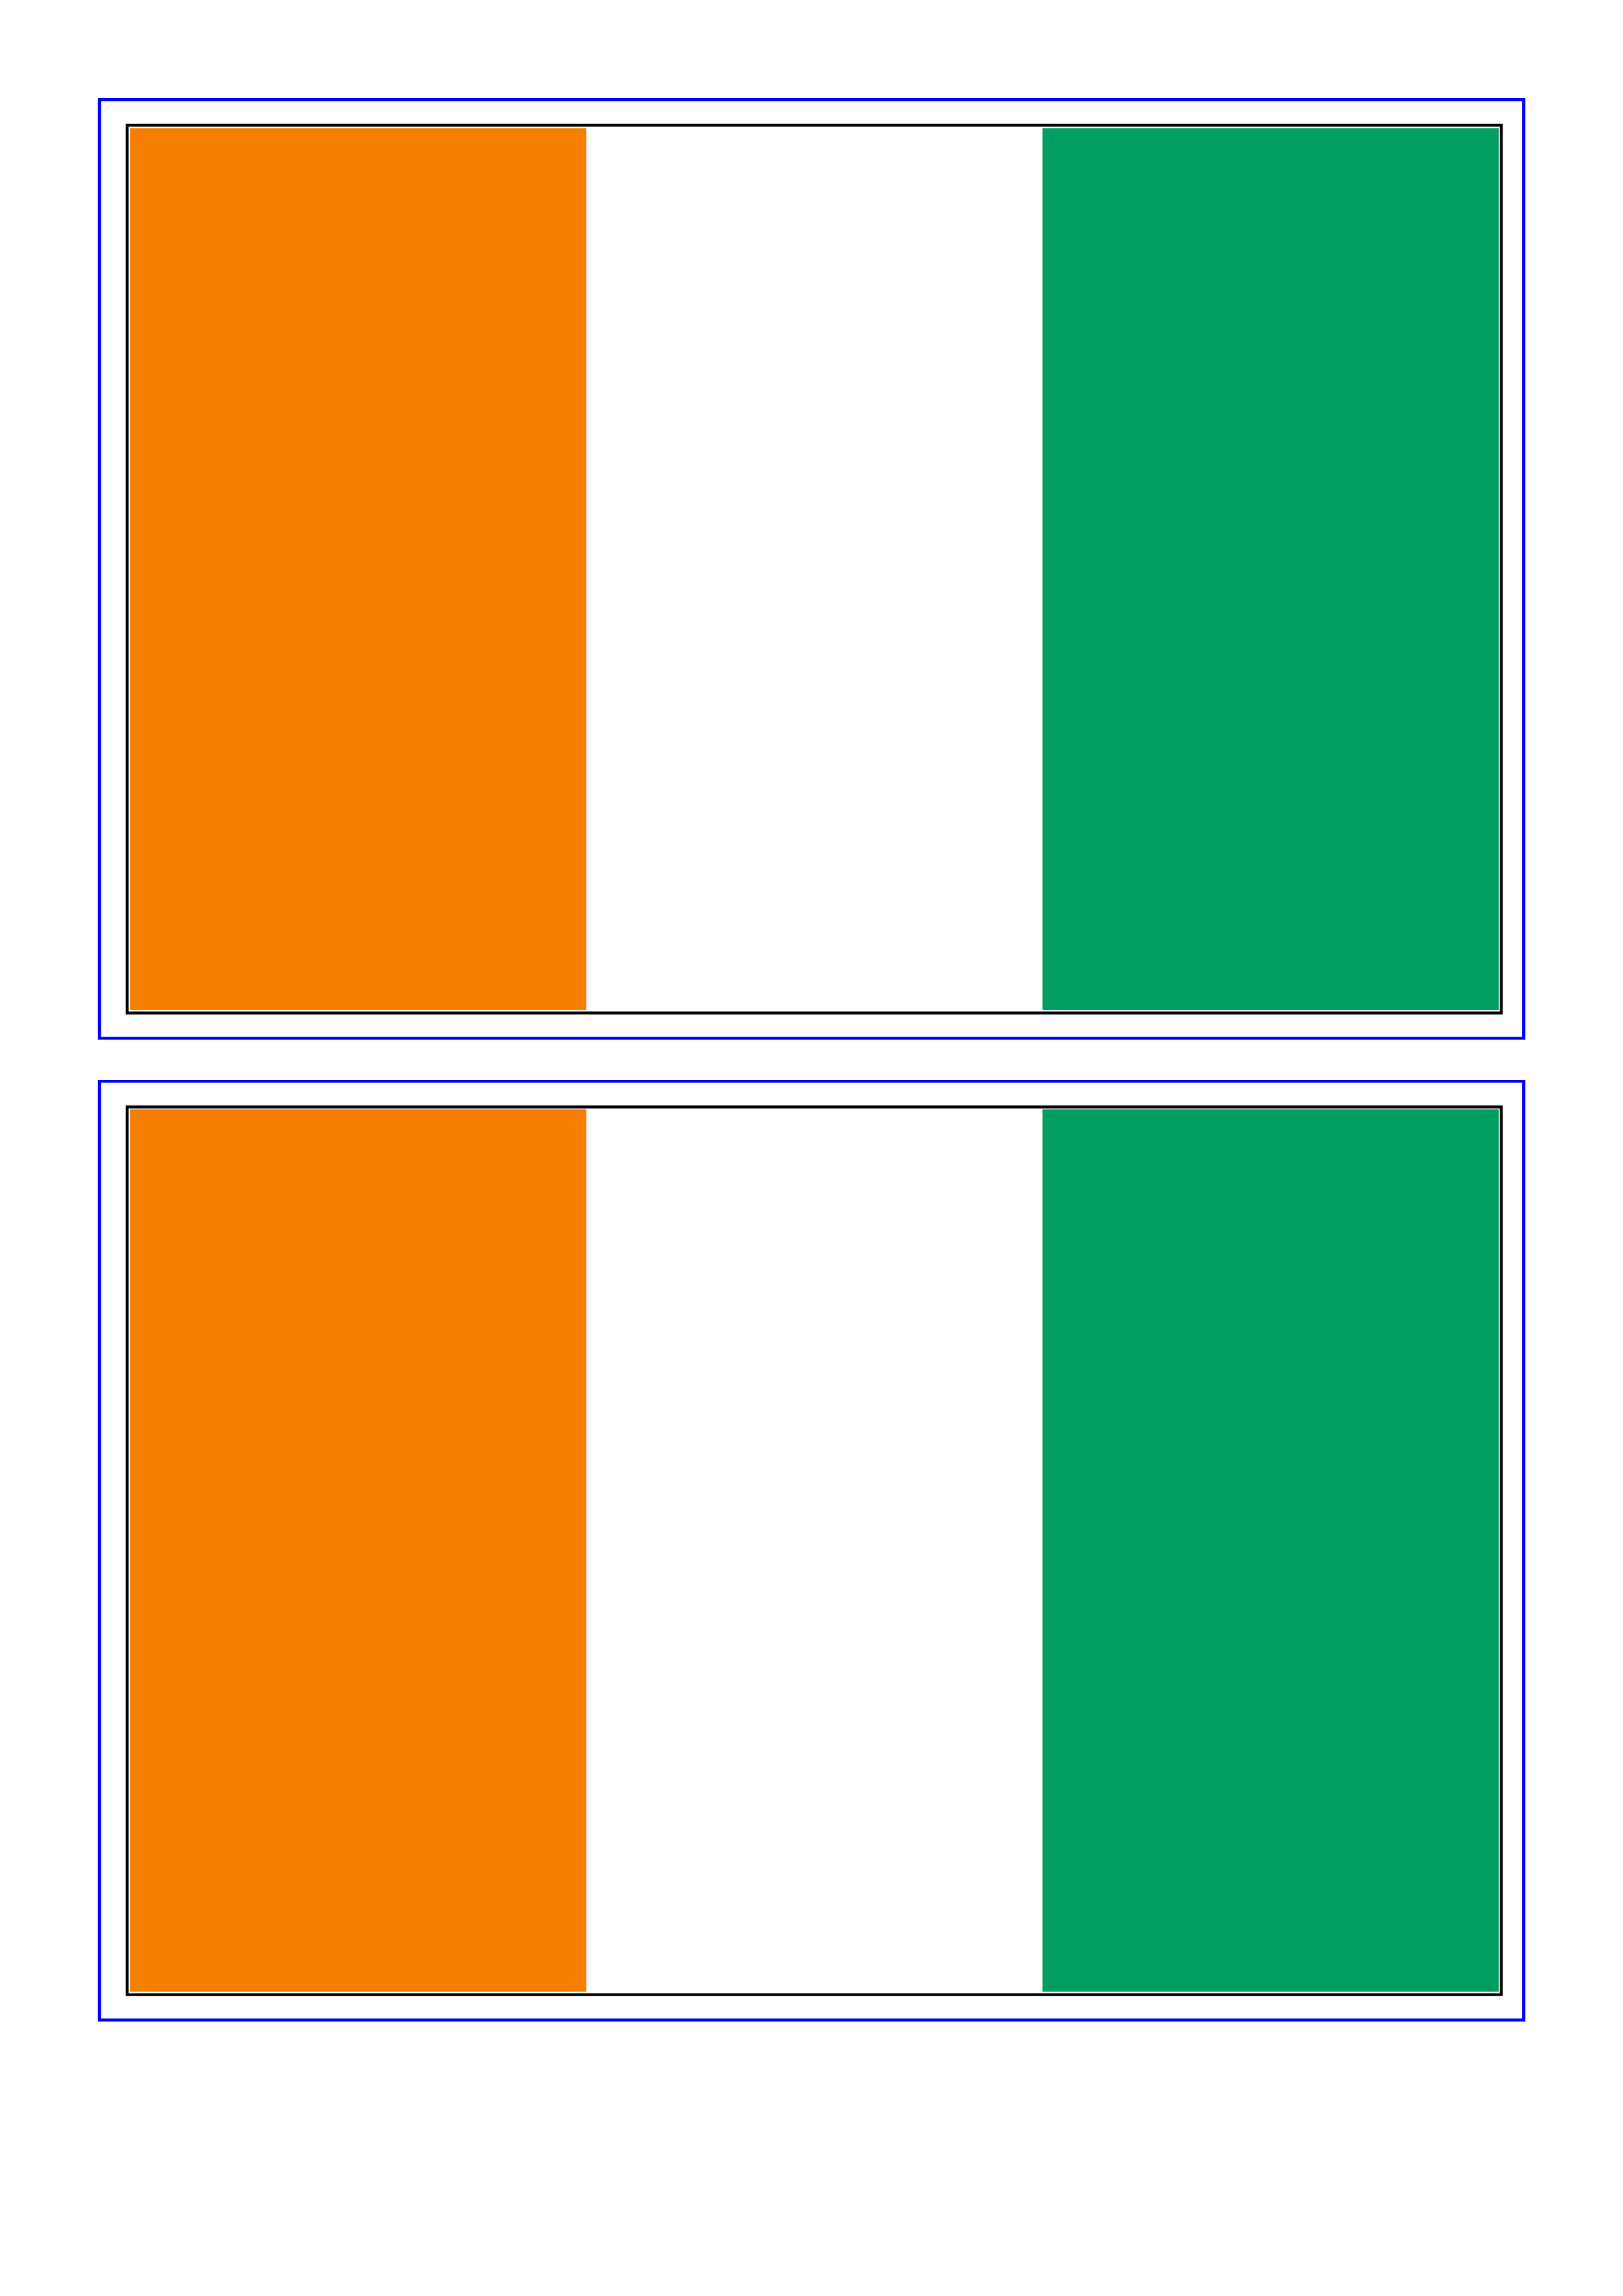 Ivory Coast Flag template 模板